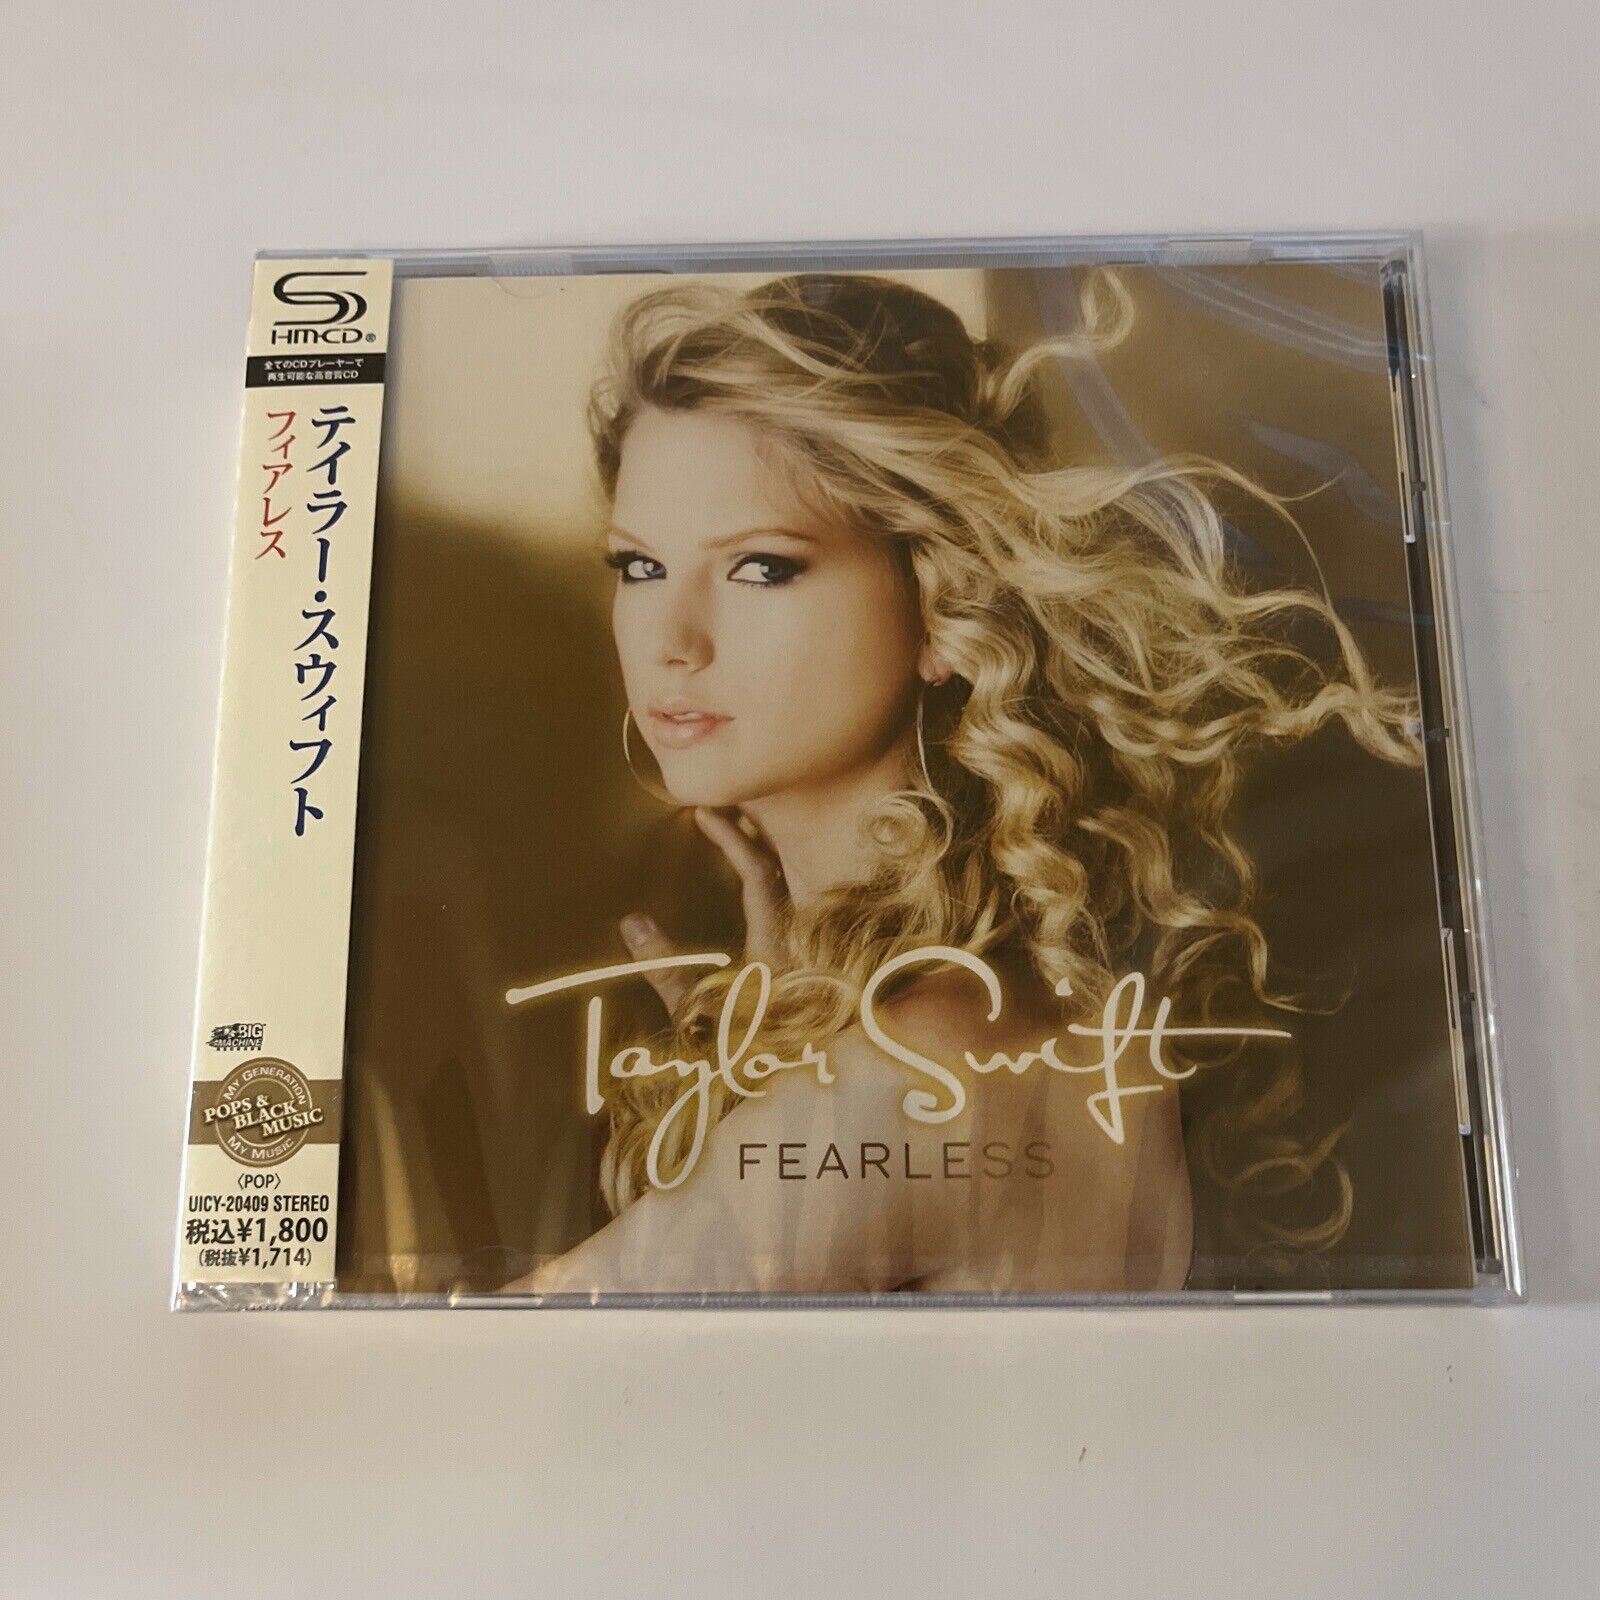 Taylor Swift - Fearless (CD, SHM-CD, 2008) Obi Japan UICY-20409 